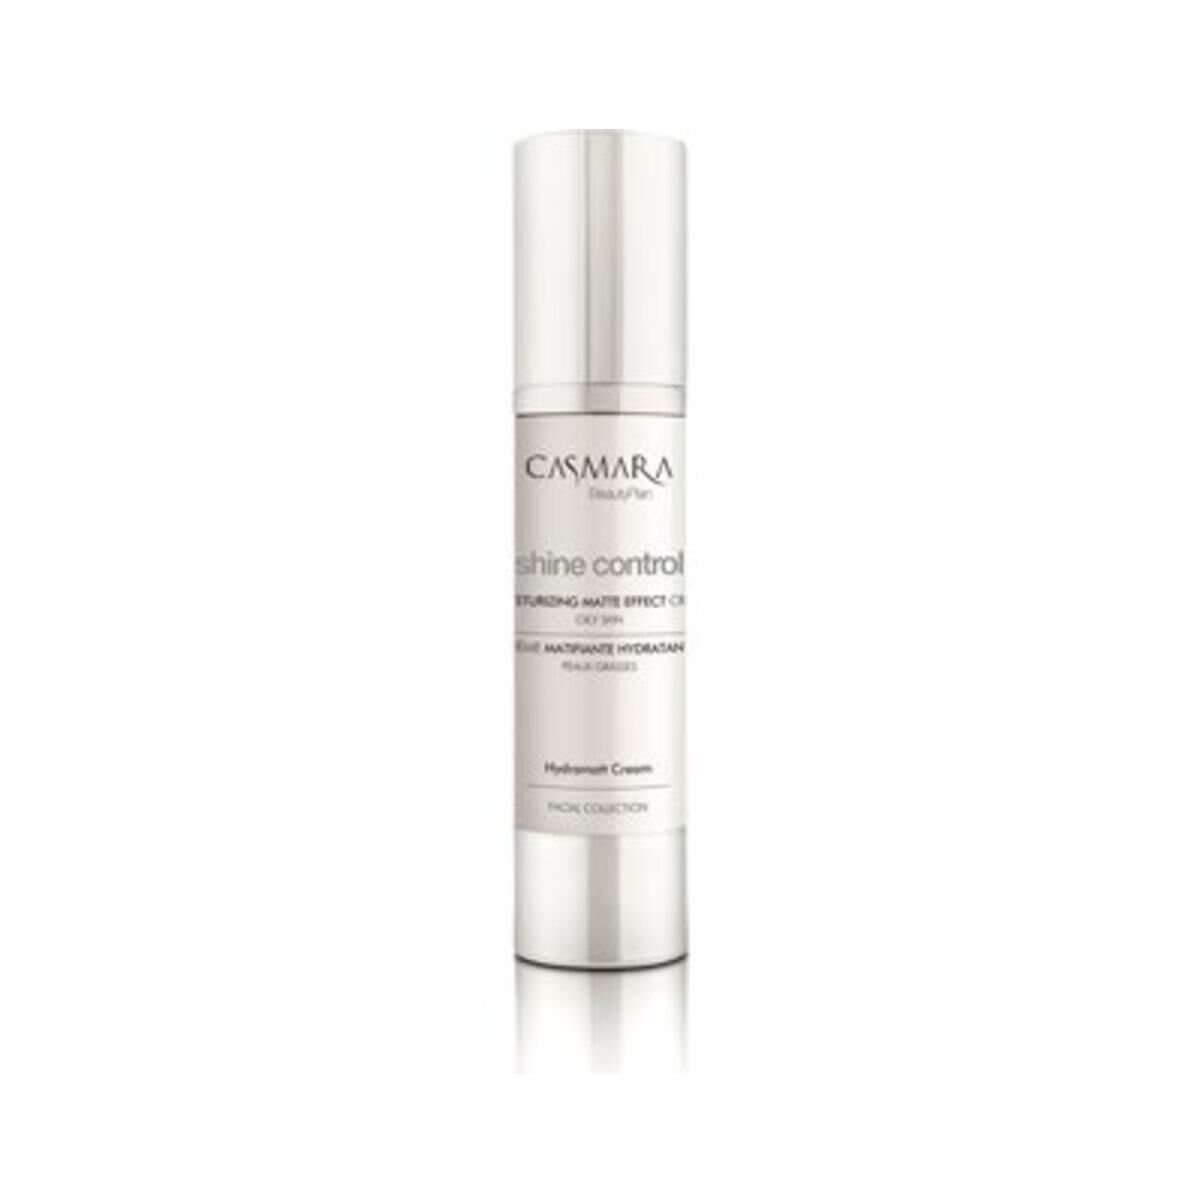 Casmara Crema Hidratante Shine Control Moisturizing Matte Effect Oily Skin Pieles Grasas 50ml - Casmara